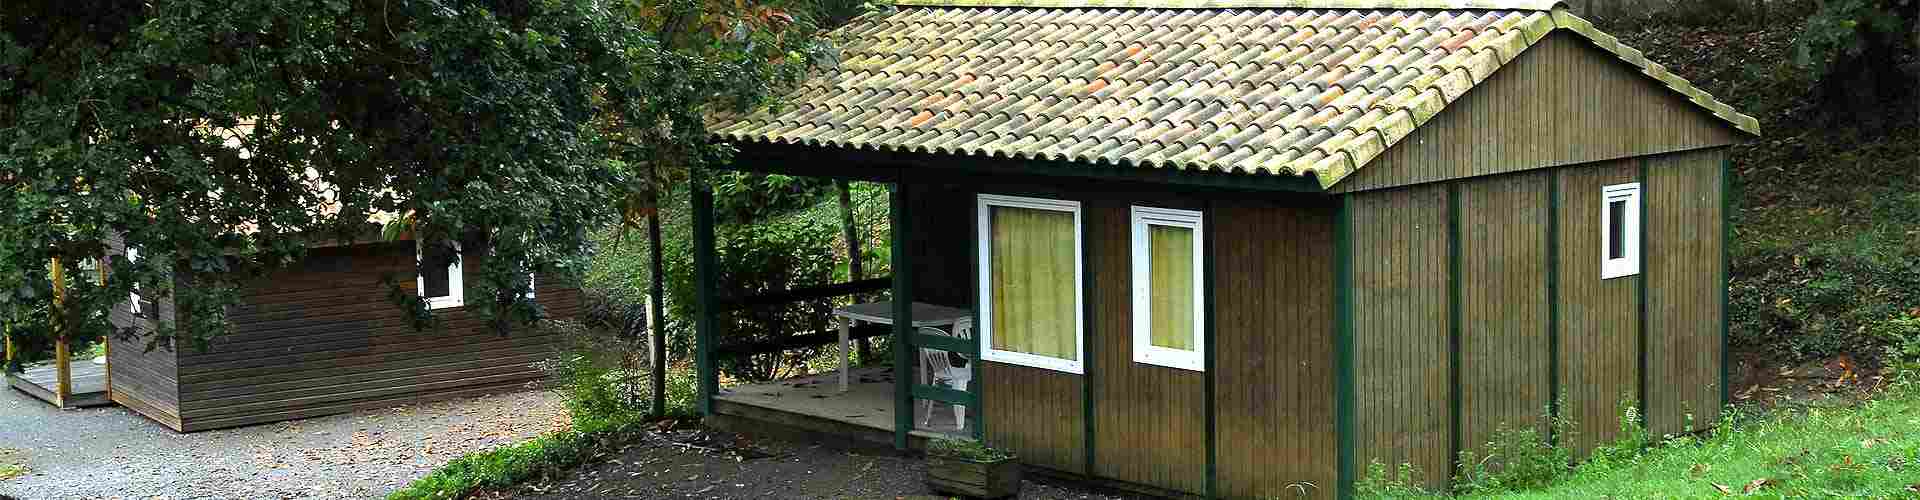 Campings o bungalows con jacuzzi en Navarra